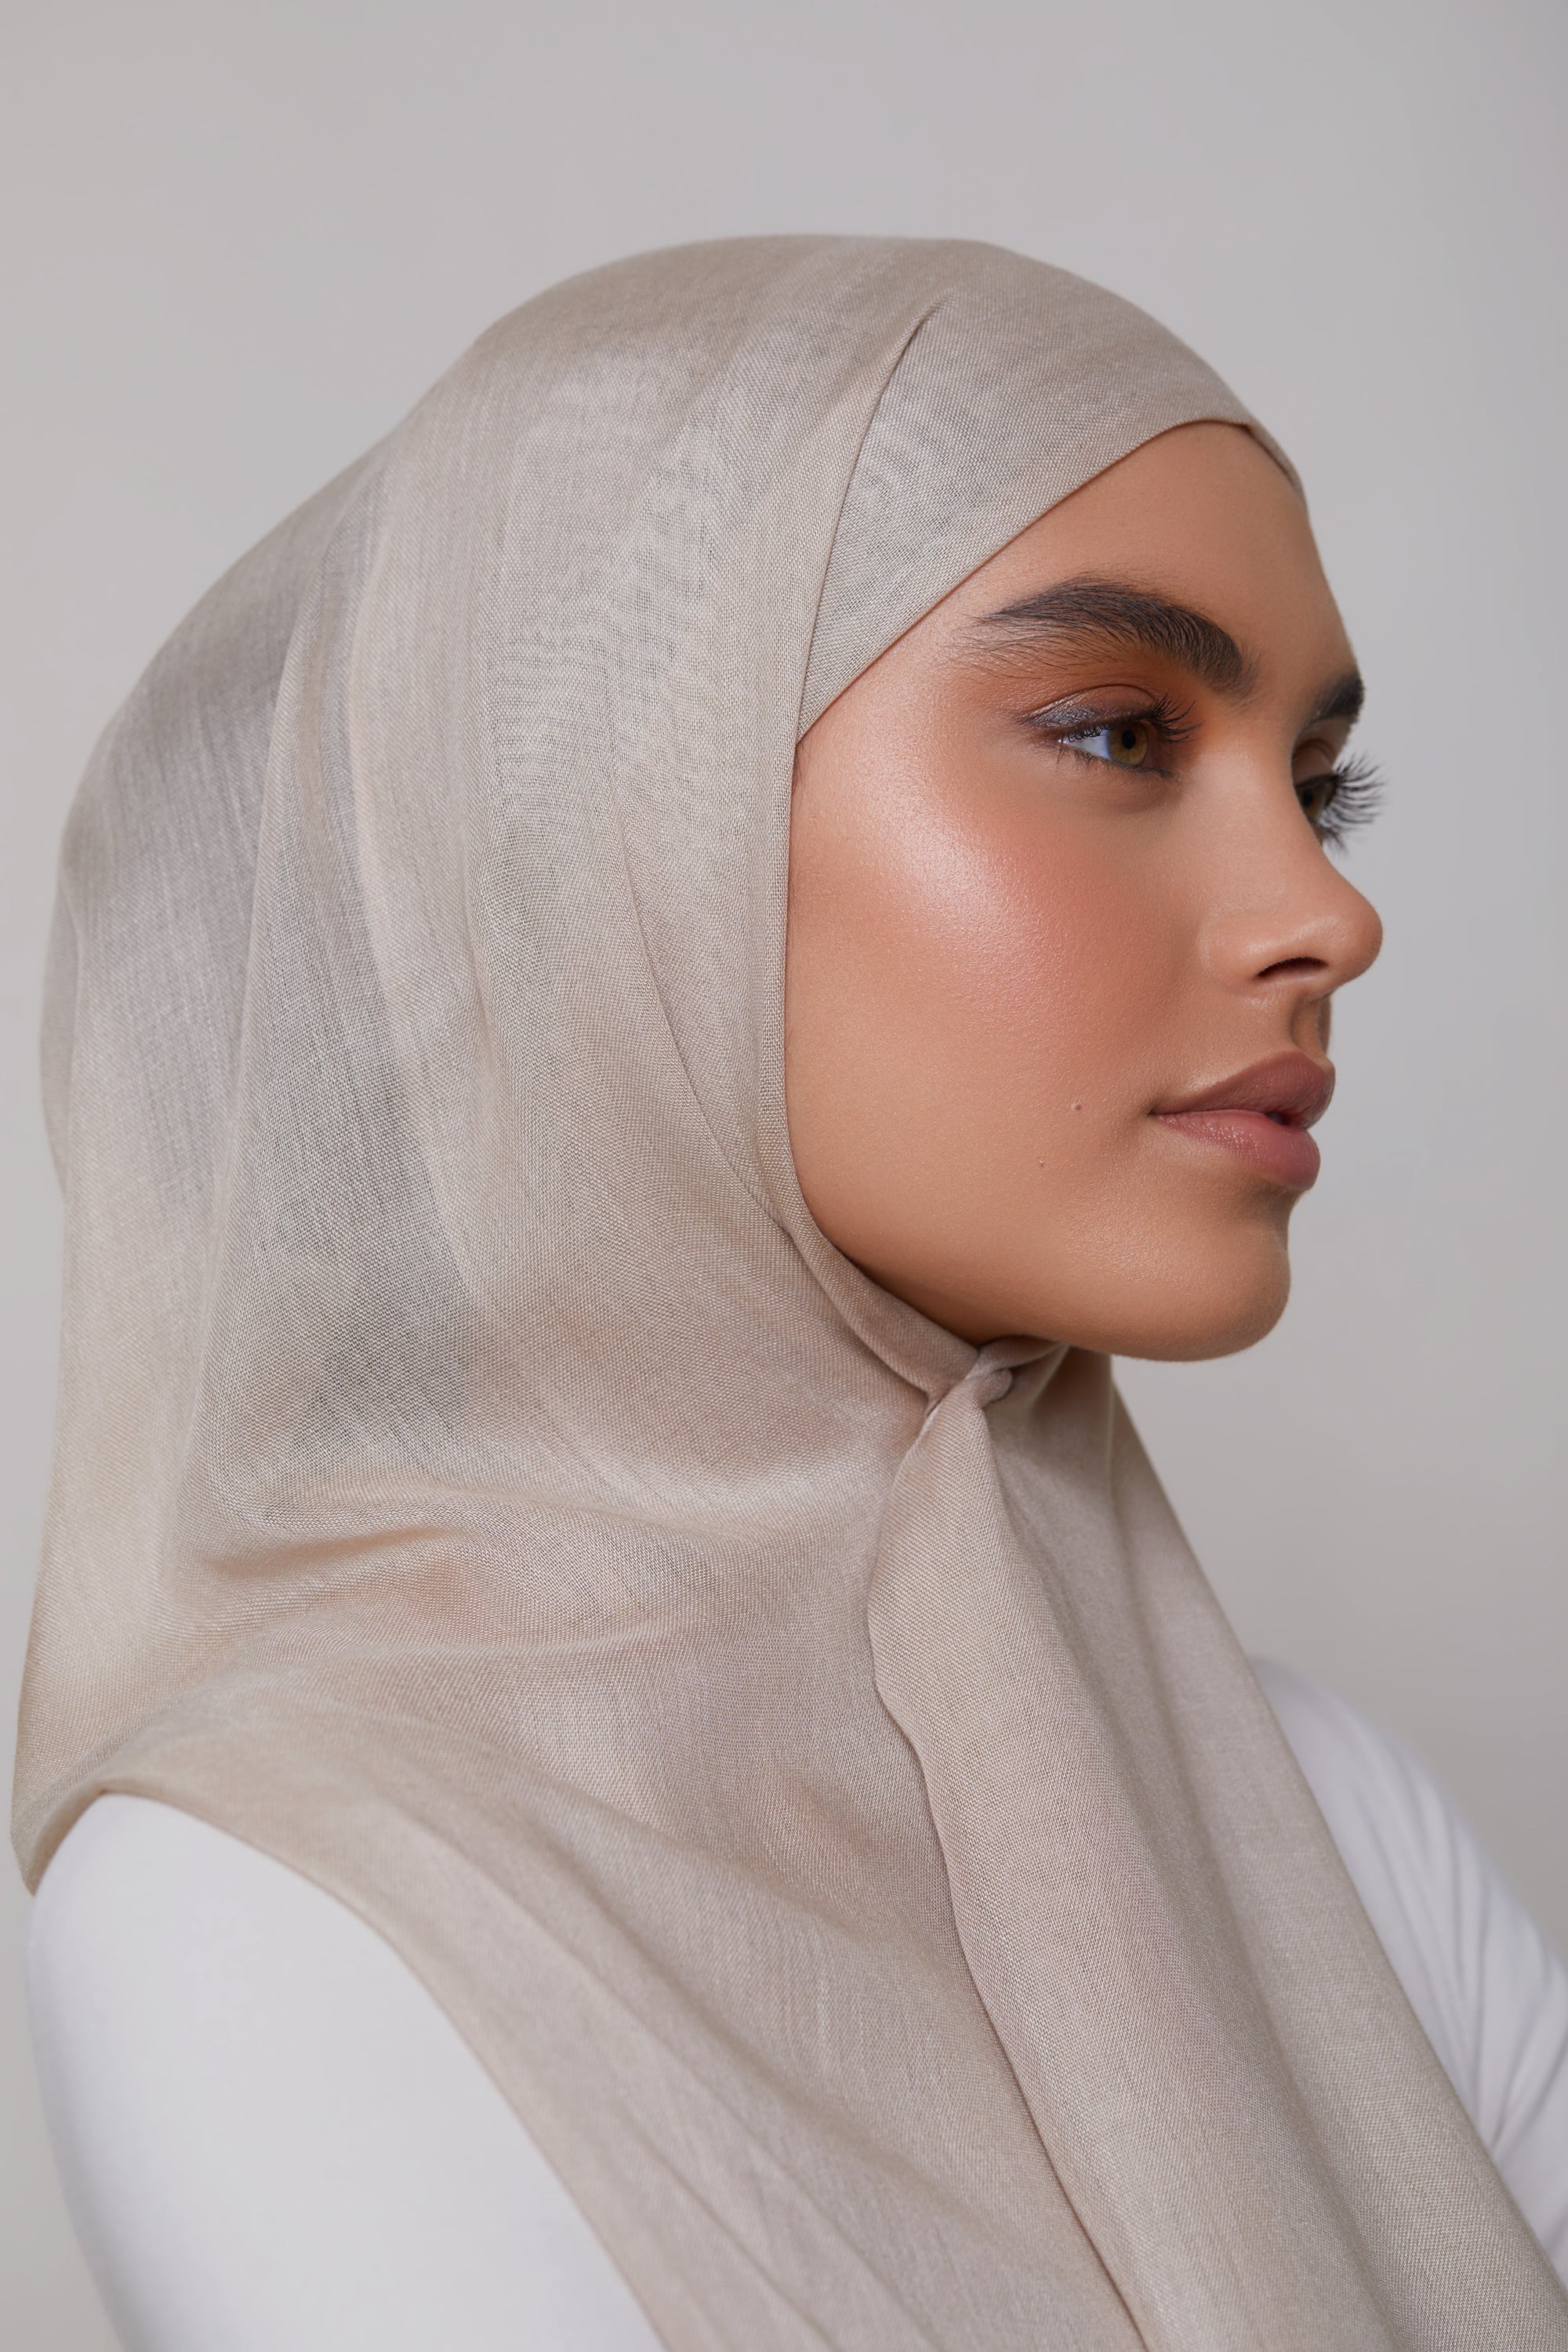 Modal Hijab - Light Sand epschoolboard 